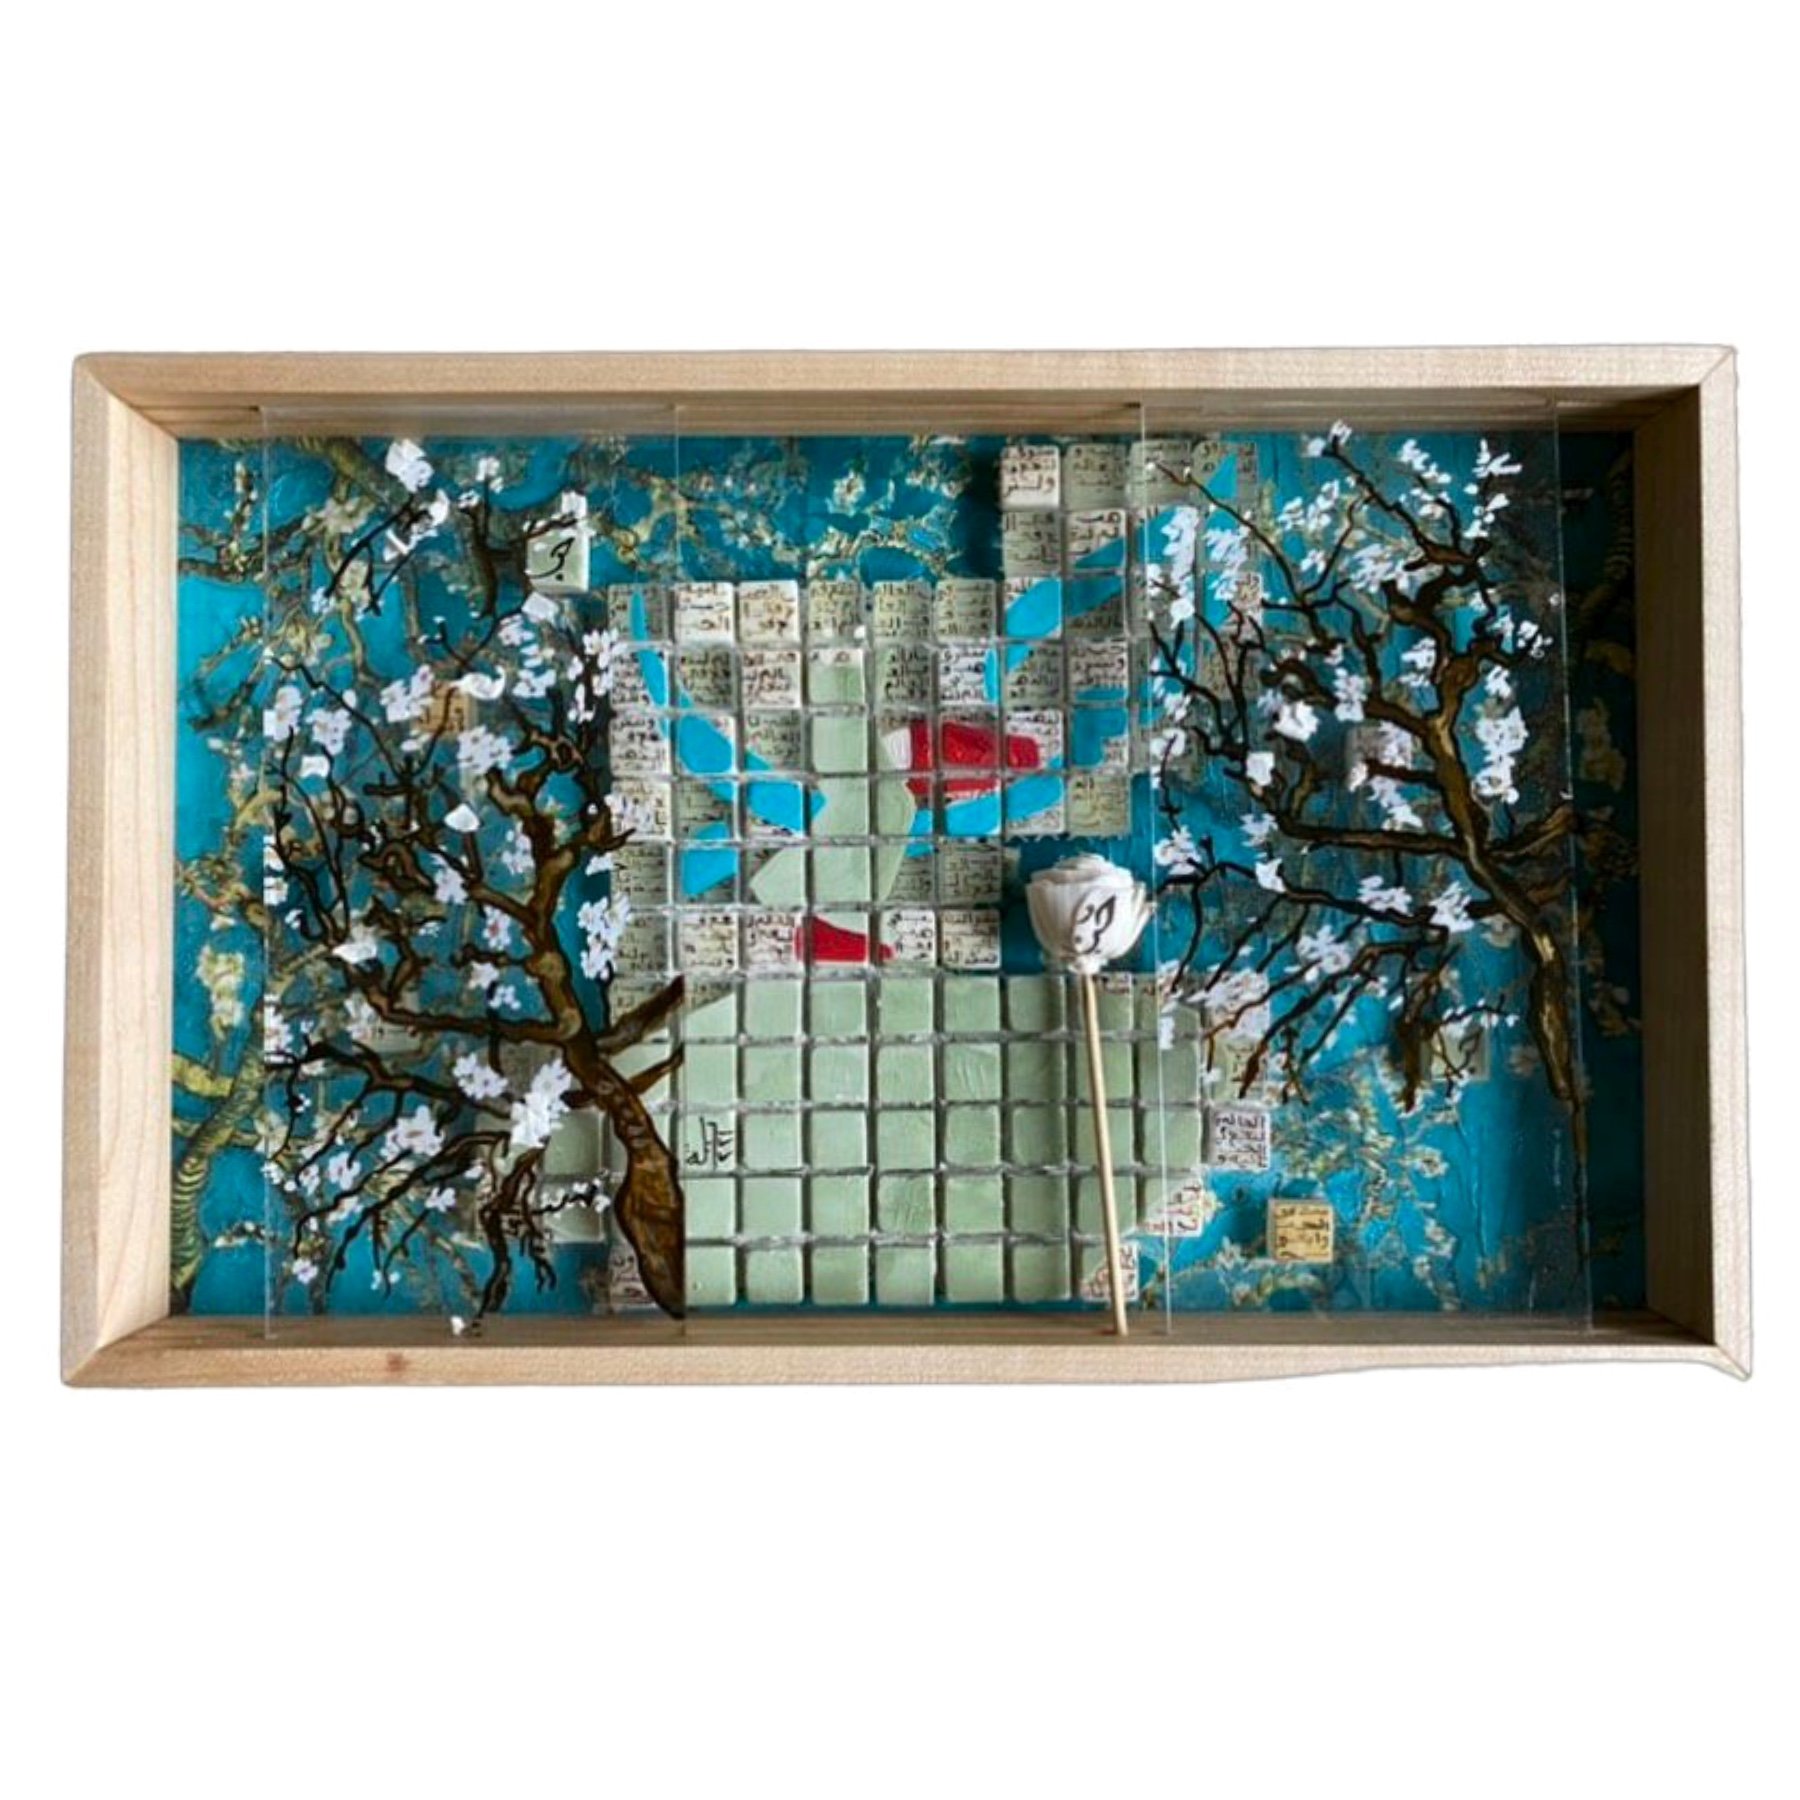   Rumi Love   Mixed media on wood panels, maple wood box credit to woodworker Carolyn Reckman  9.75” x 15.5” x 1.75” 